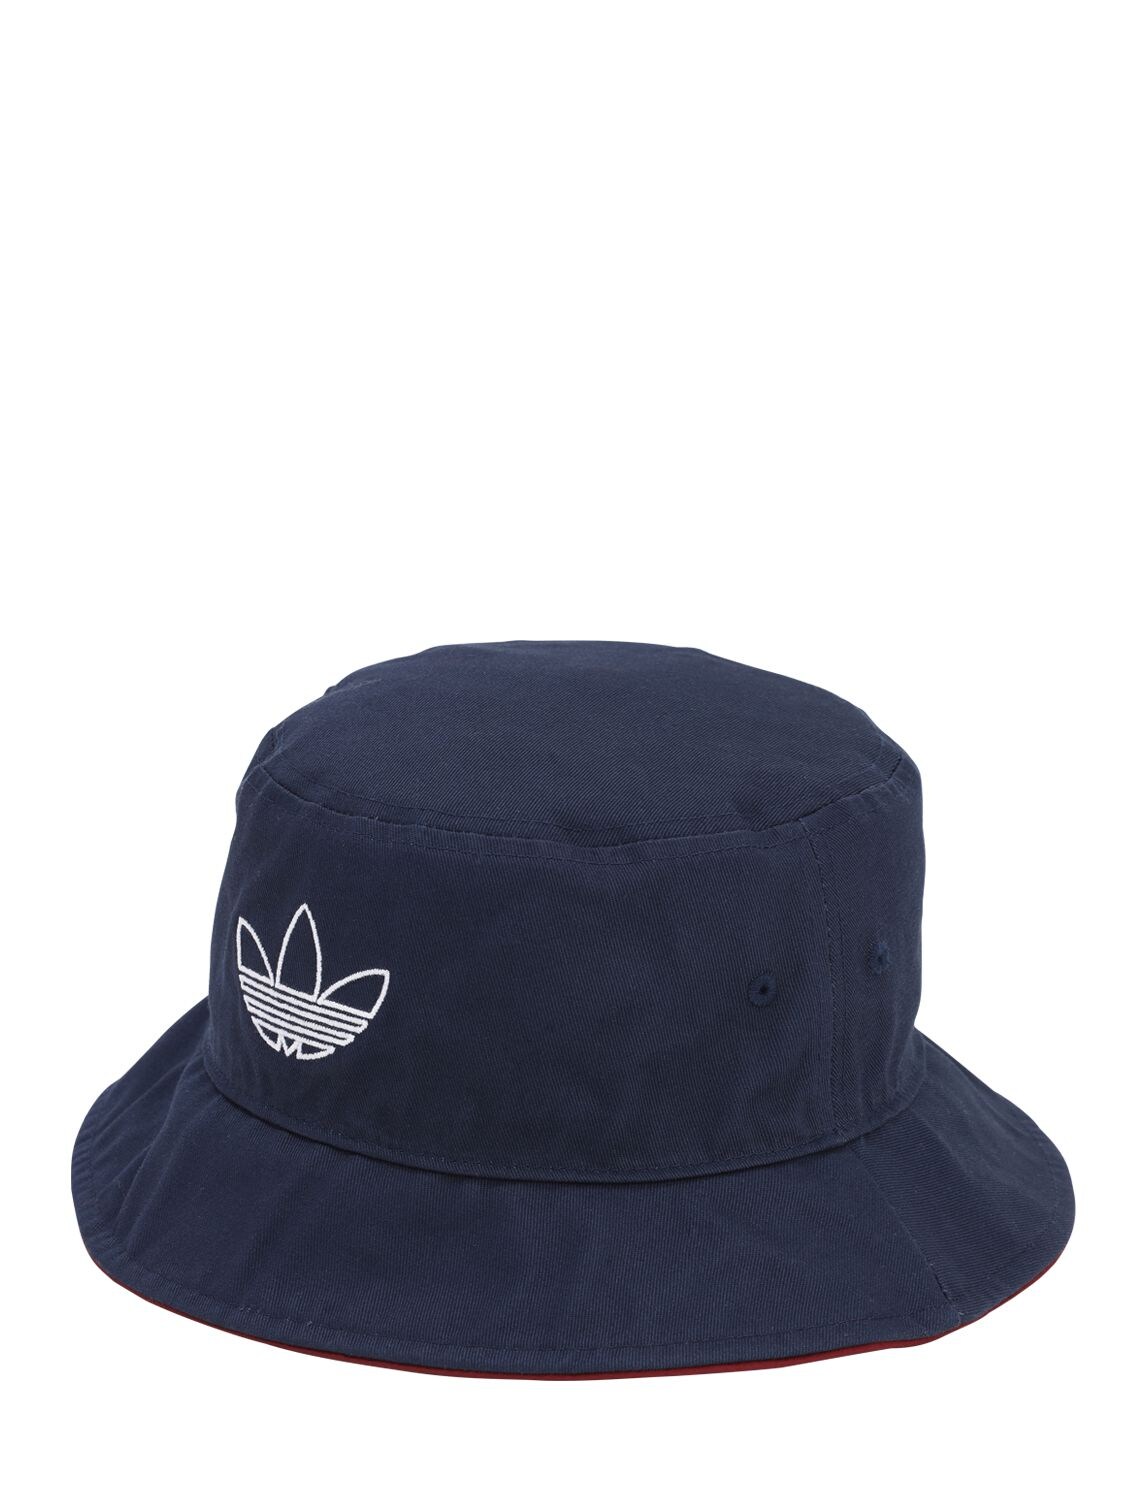 Adidas Originals Reversible Trefoil Logo Bucket Hat In Navy,bordeaux ...